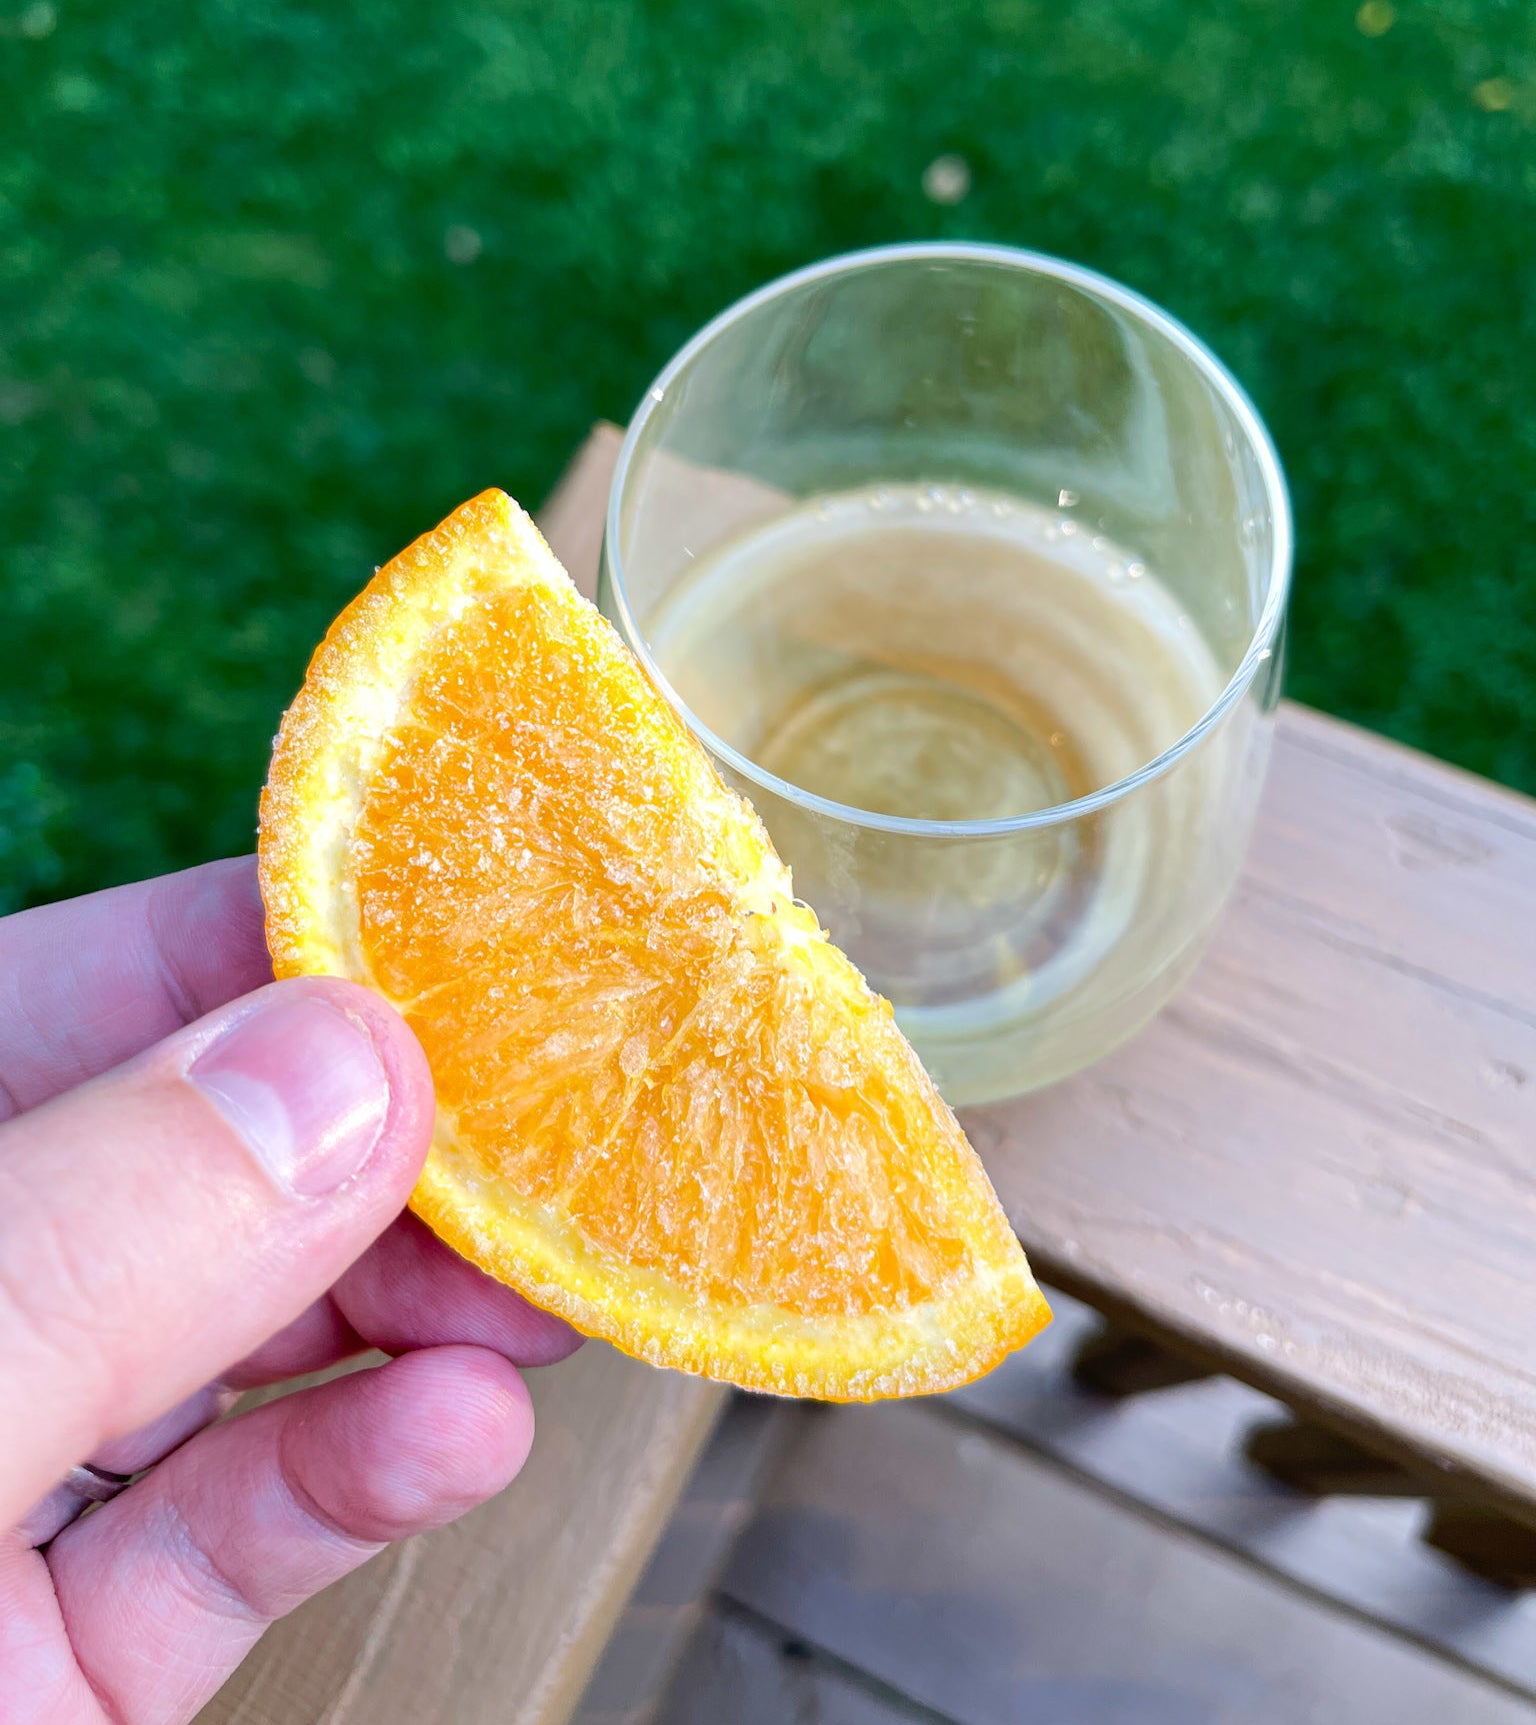 Adding frozen orange to glass of Lillet